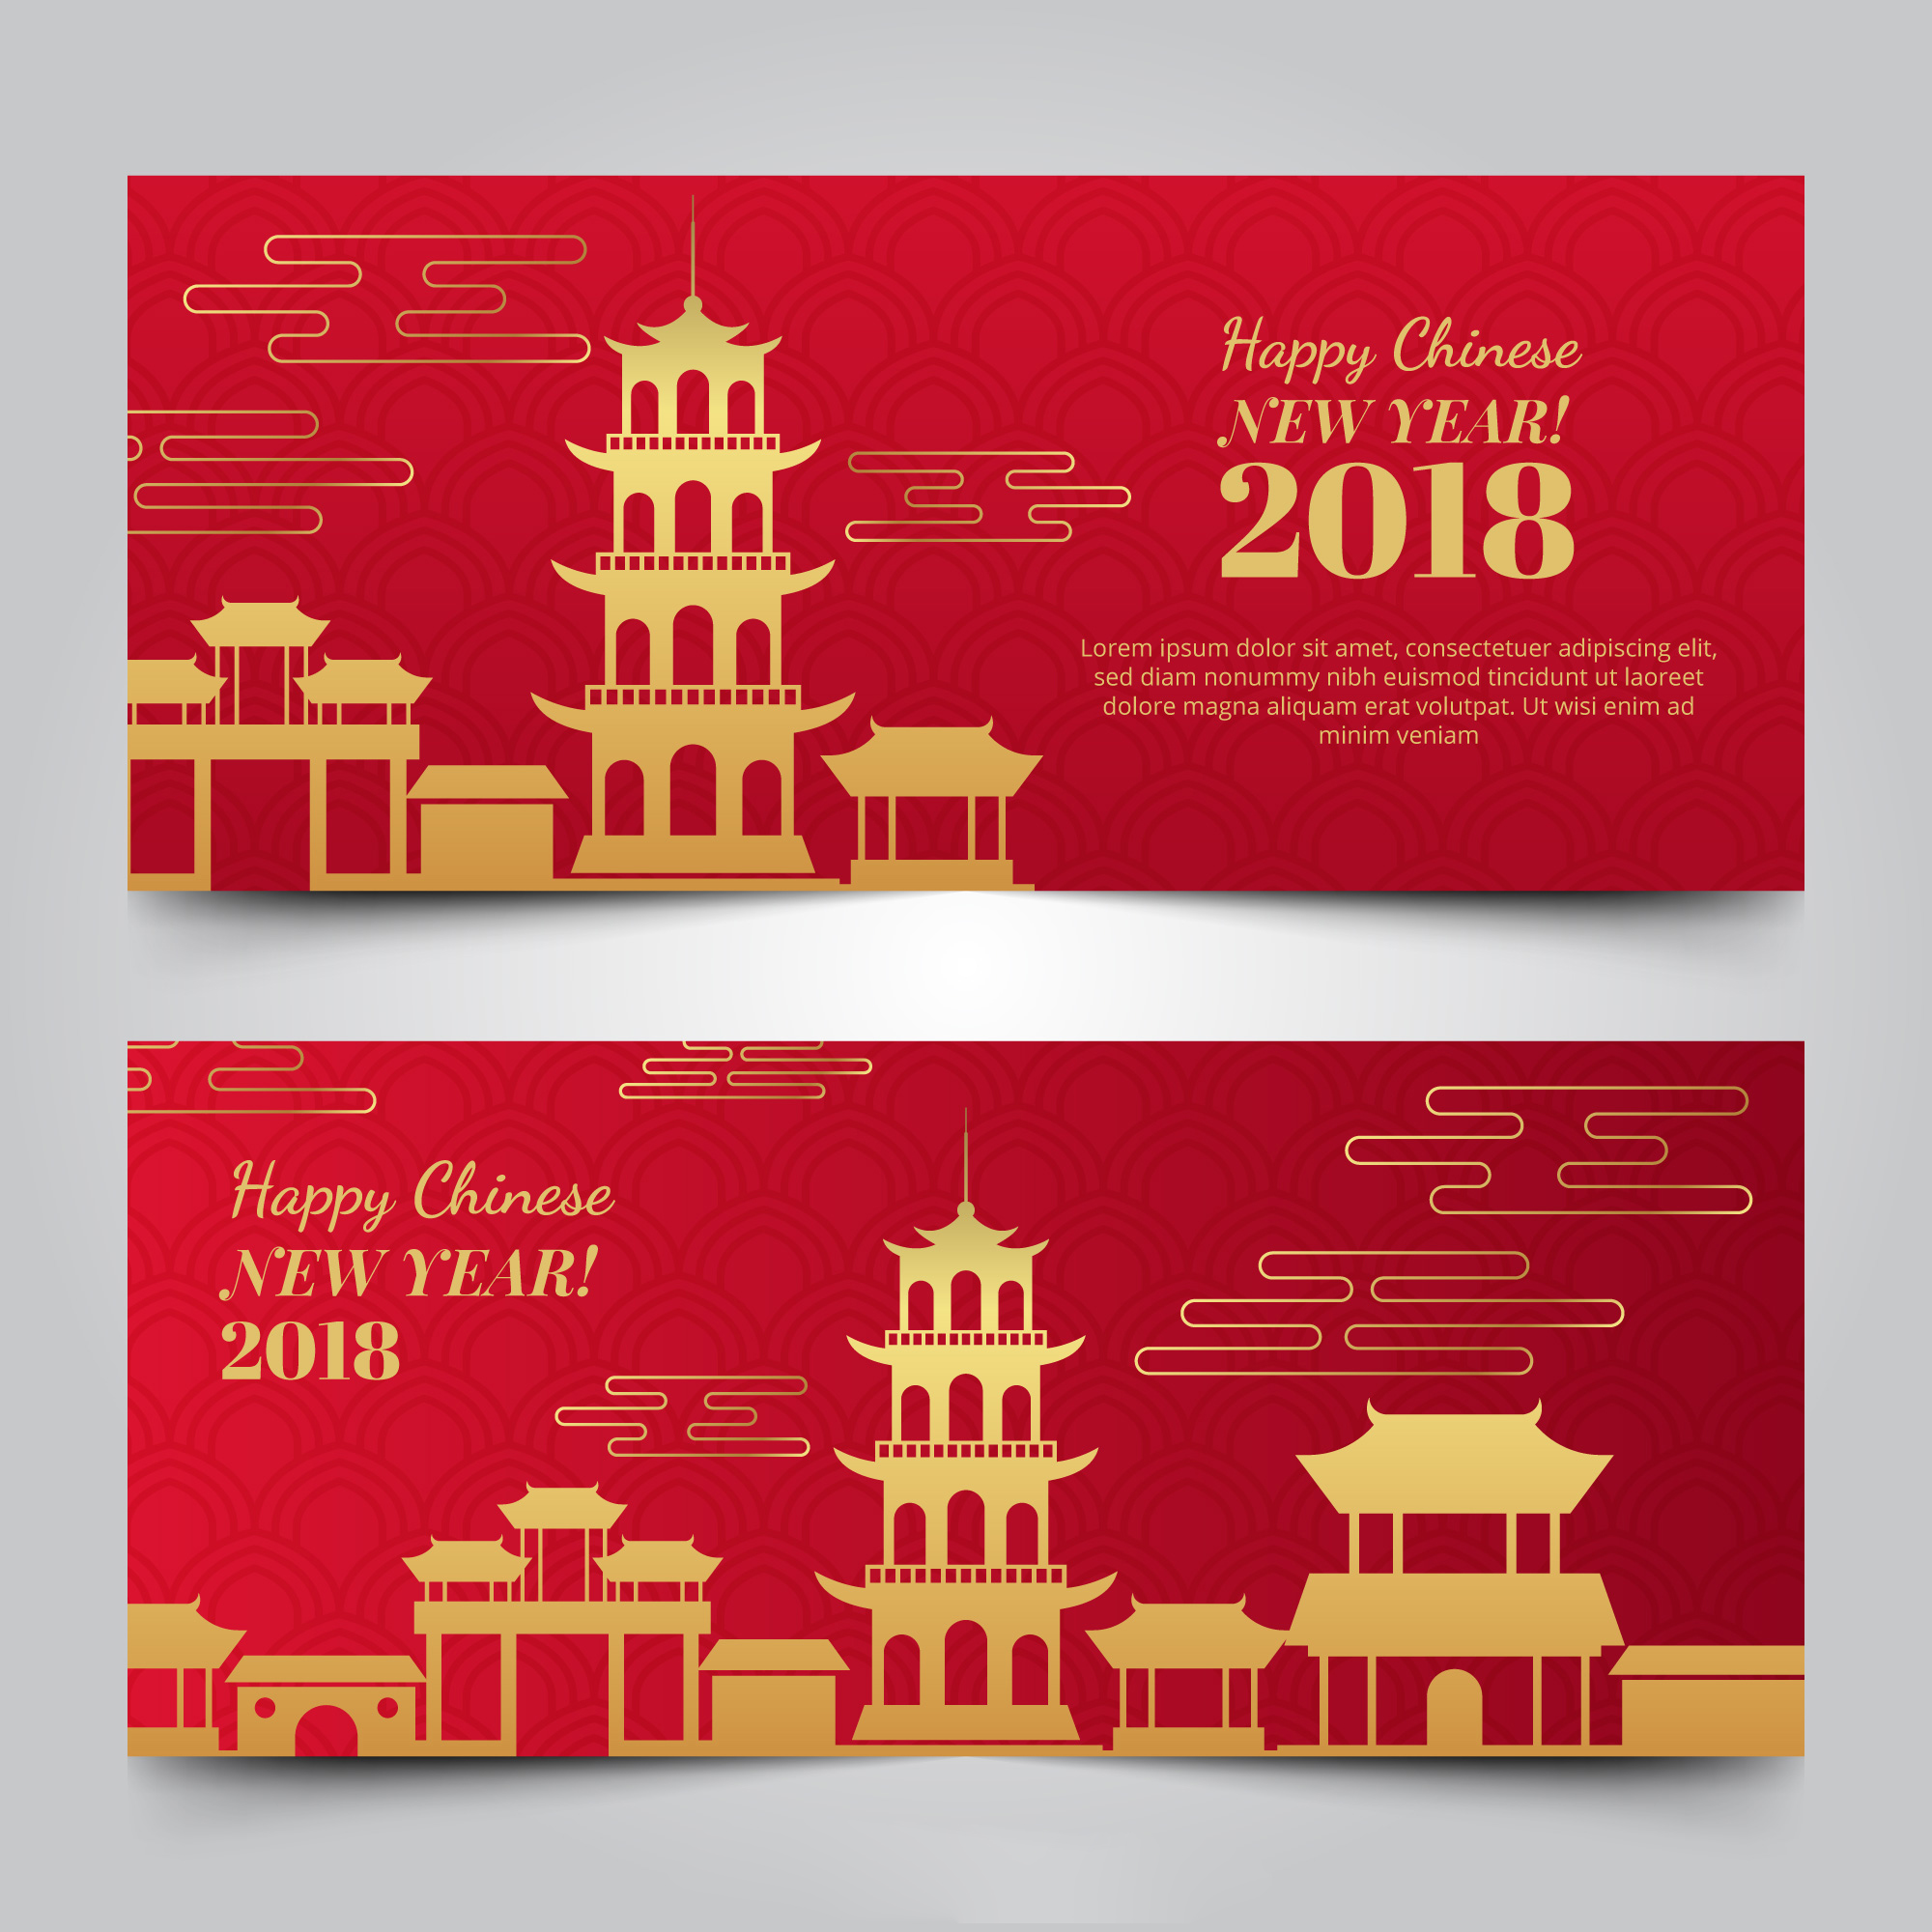 2019新年农历猪年贺卡矢量素材模板 2019 New Year Lunar Year Of The Pig Greeting Card Vector Material Template插图7